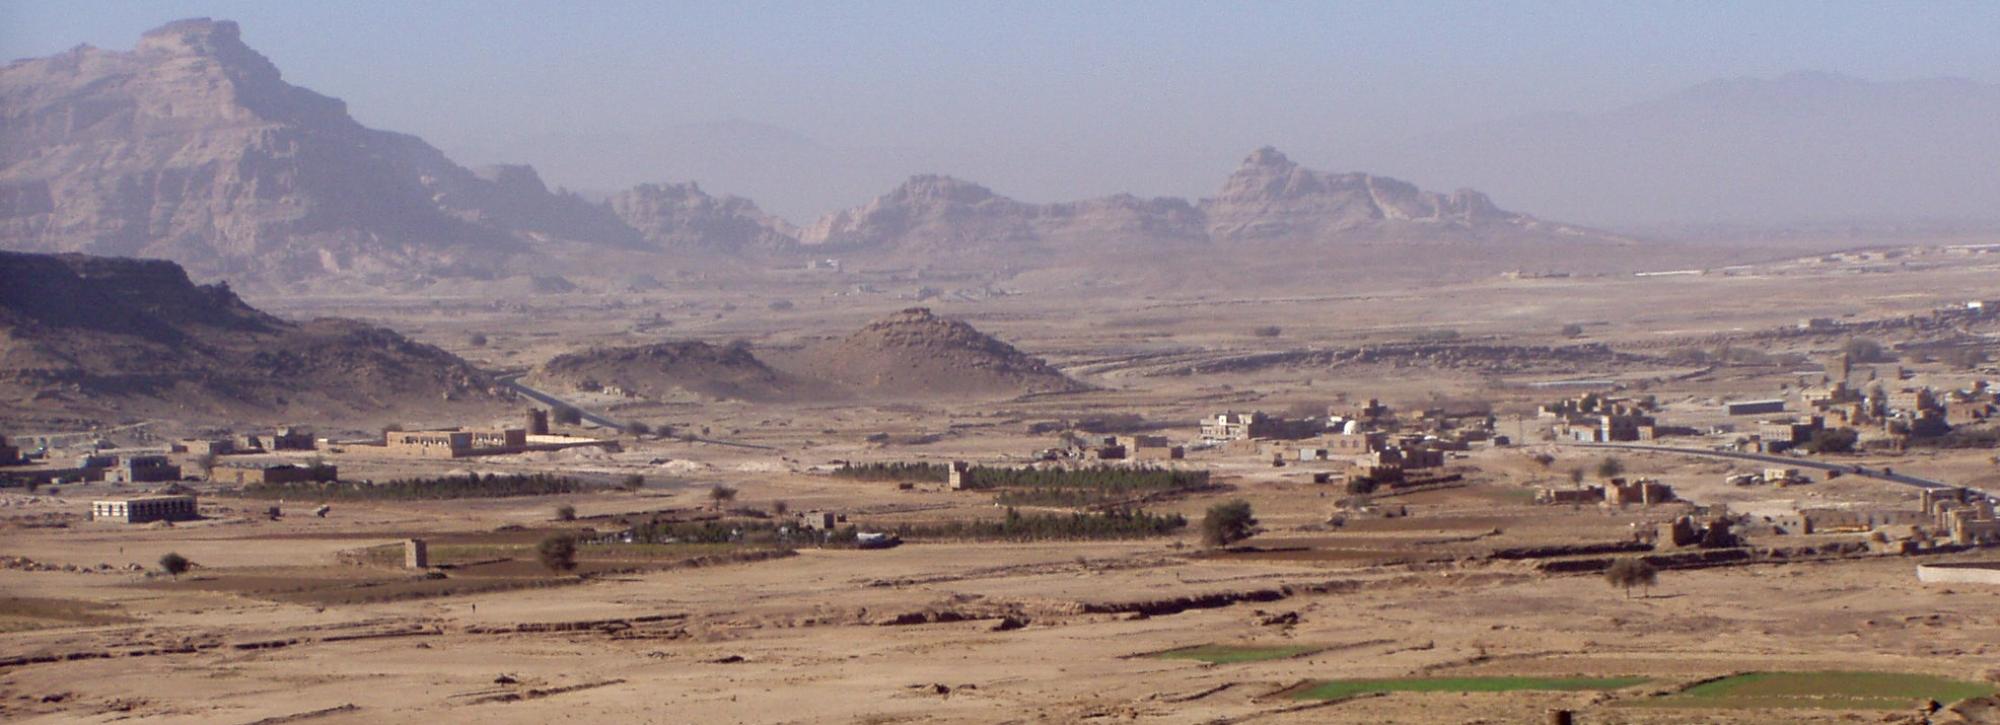 View of desert in Yemen, showing water shortage